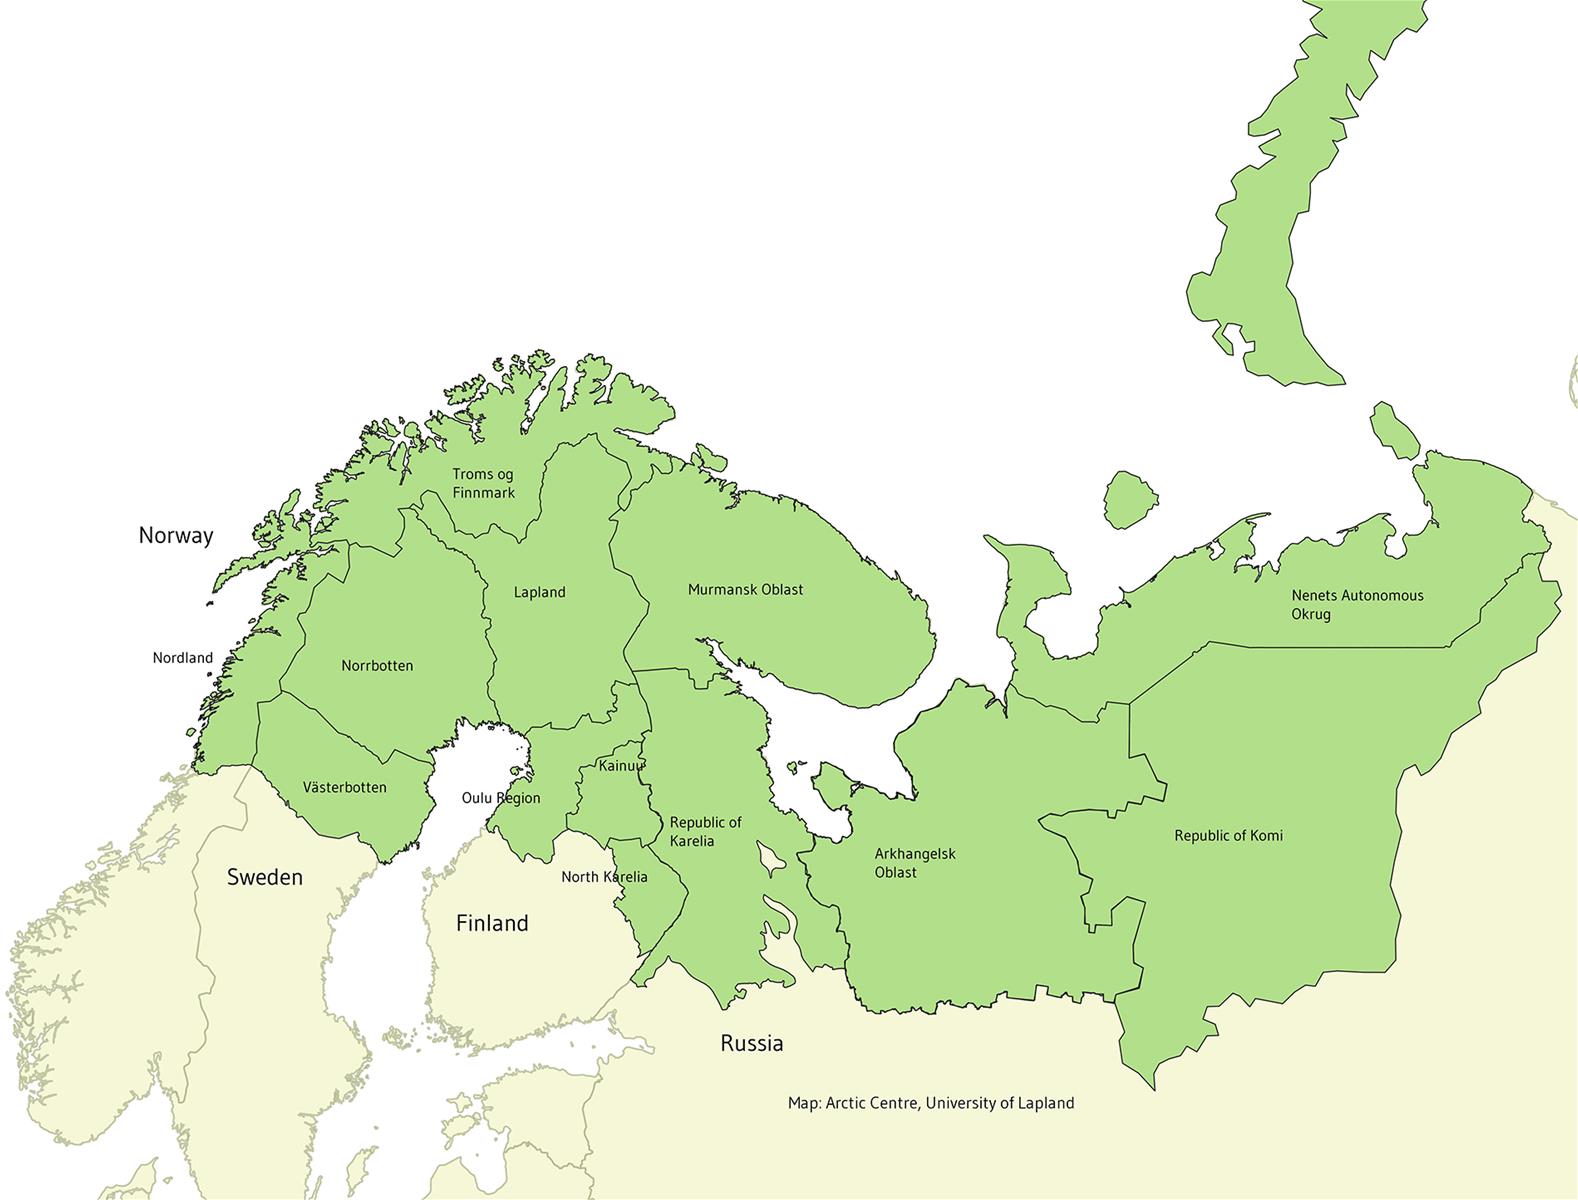 Map of the Barents Euro-Arctic Region